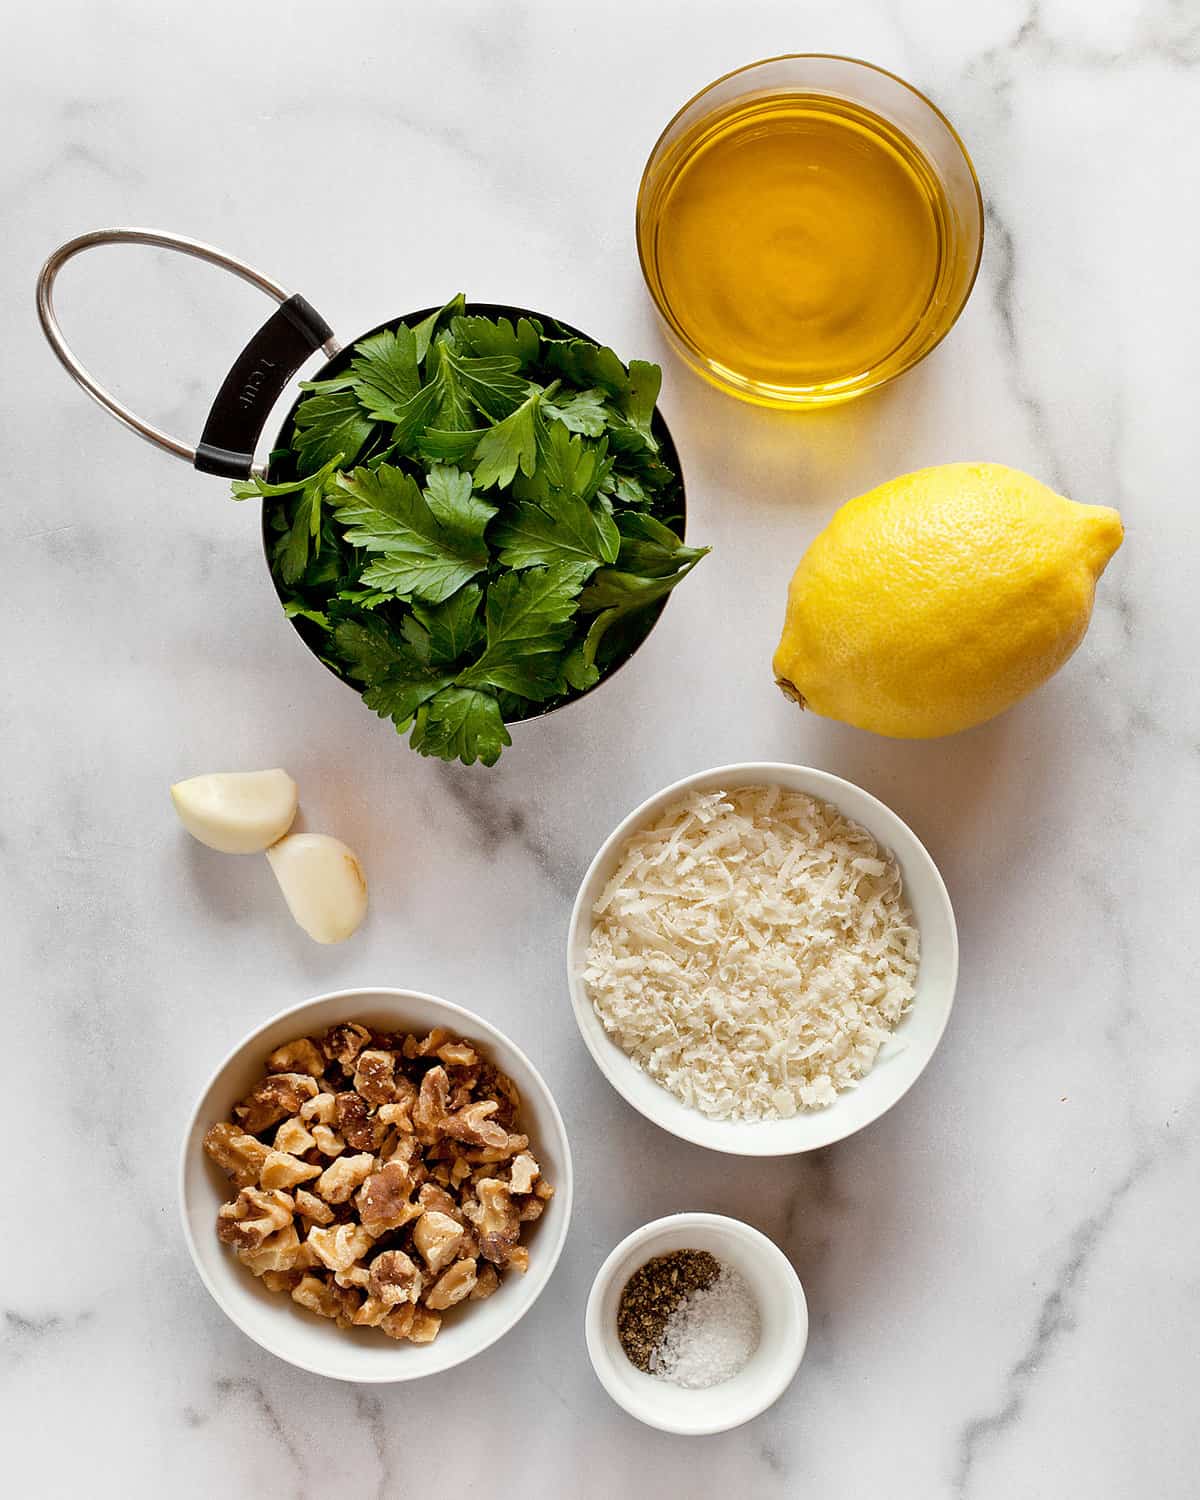 Ingredients including parsley, Parmesan, walnuts, lemon, garlic, olive oil, salt and pepper.